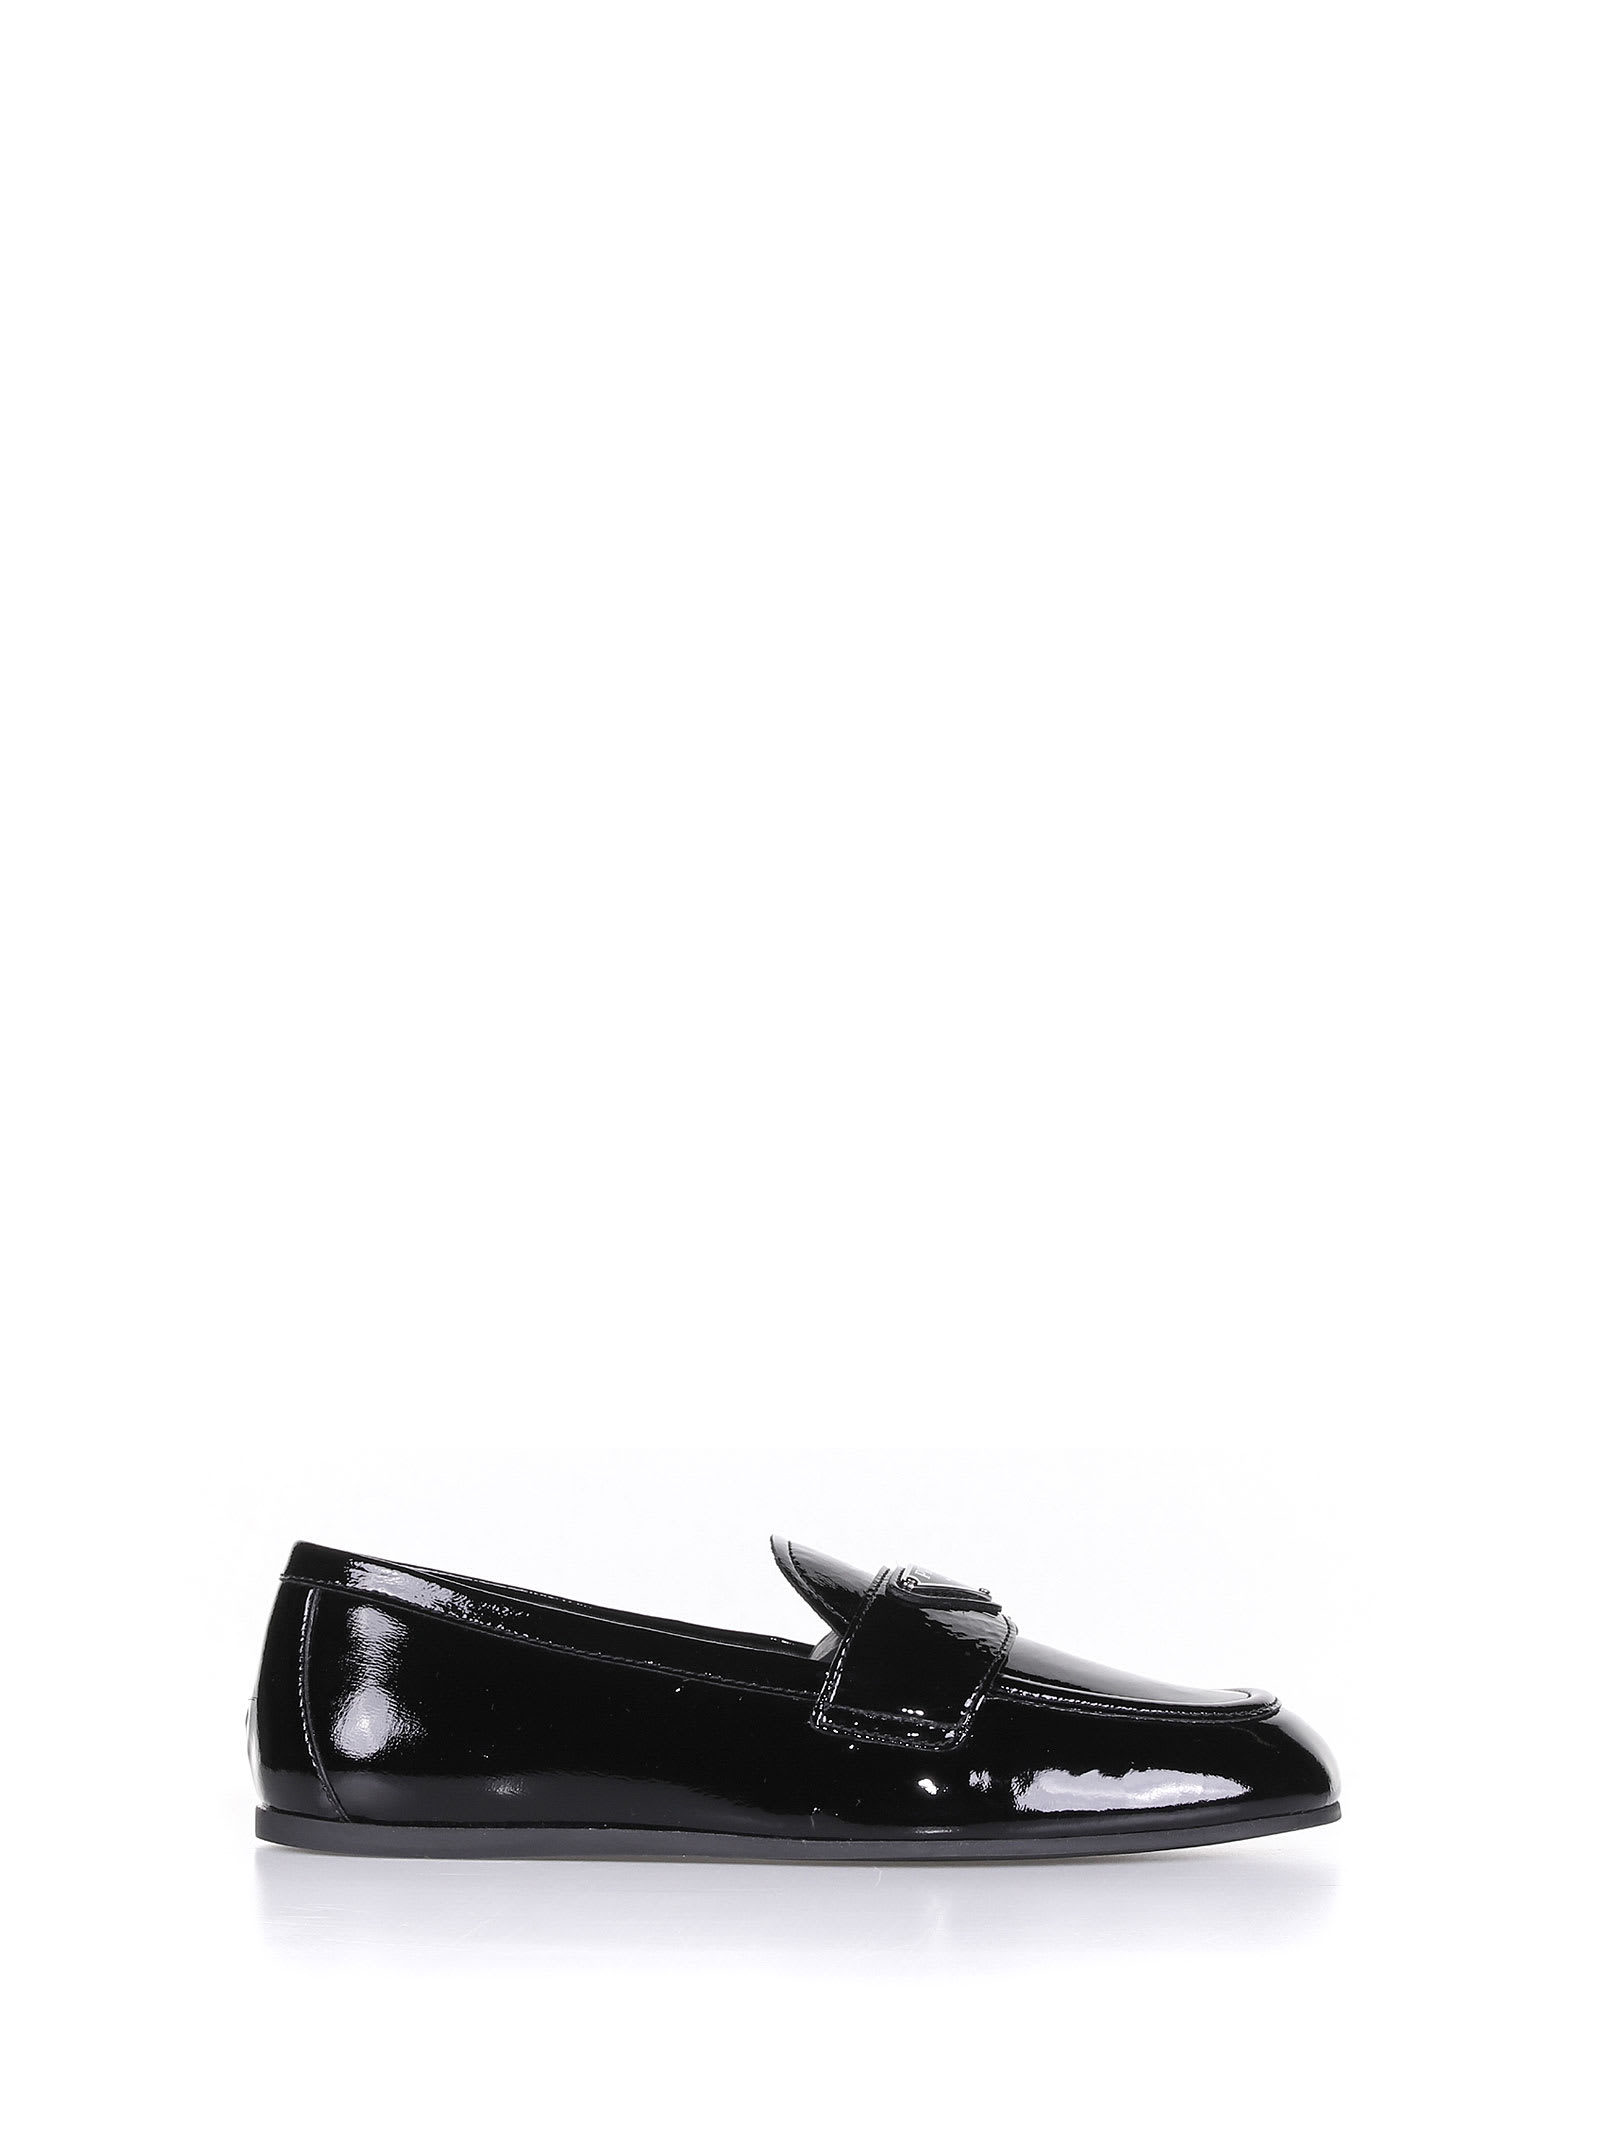 Prada Loafer In Black Patent Leather